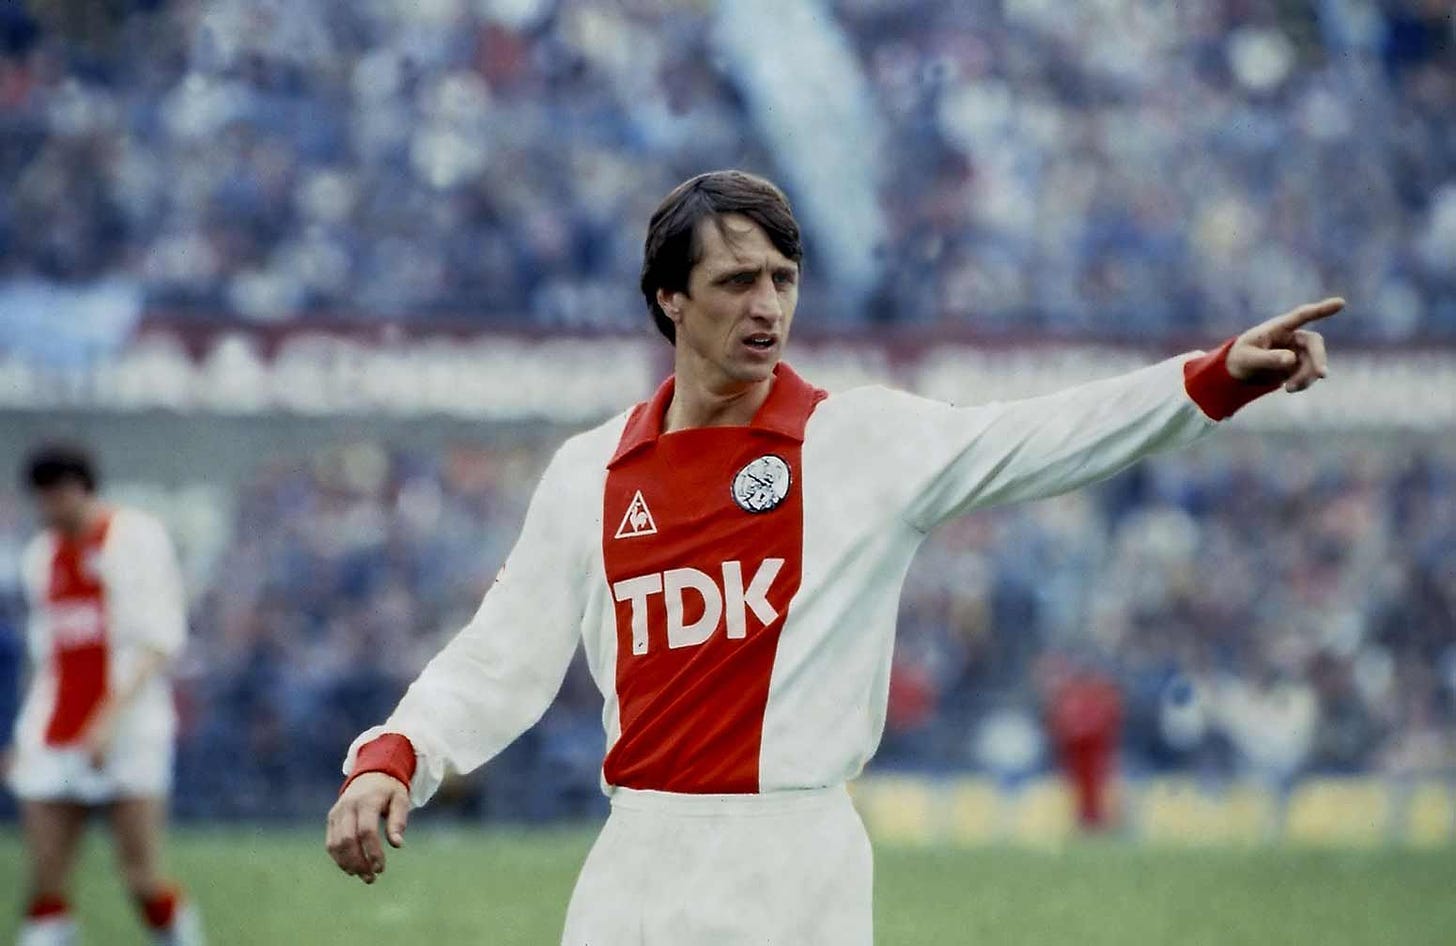 Johan Cruyff, Ajax | Johan cruyff, Ajax, Good soccer players